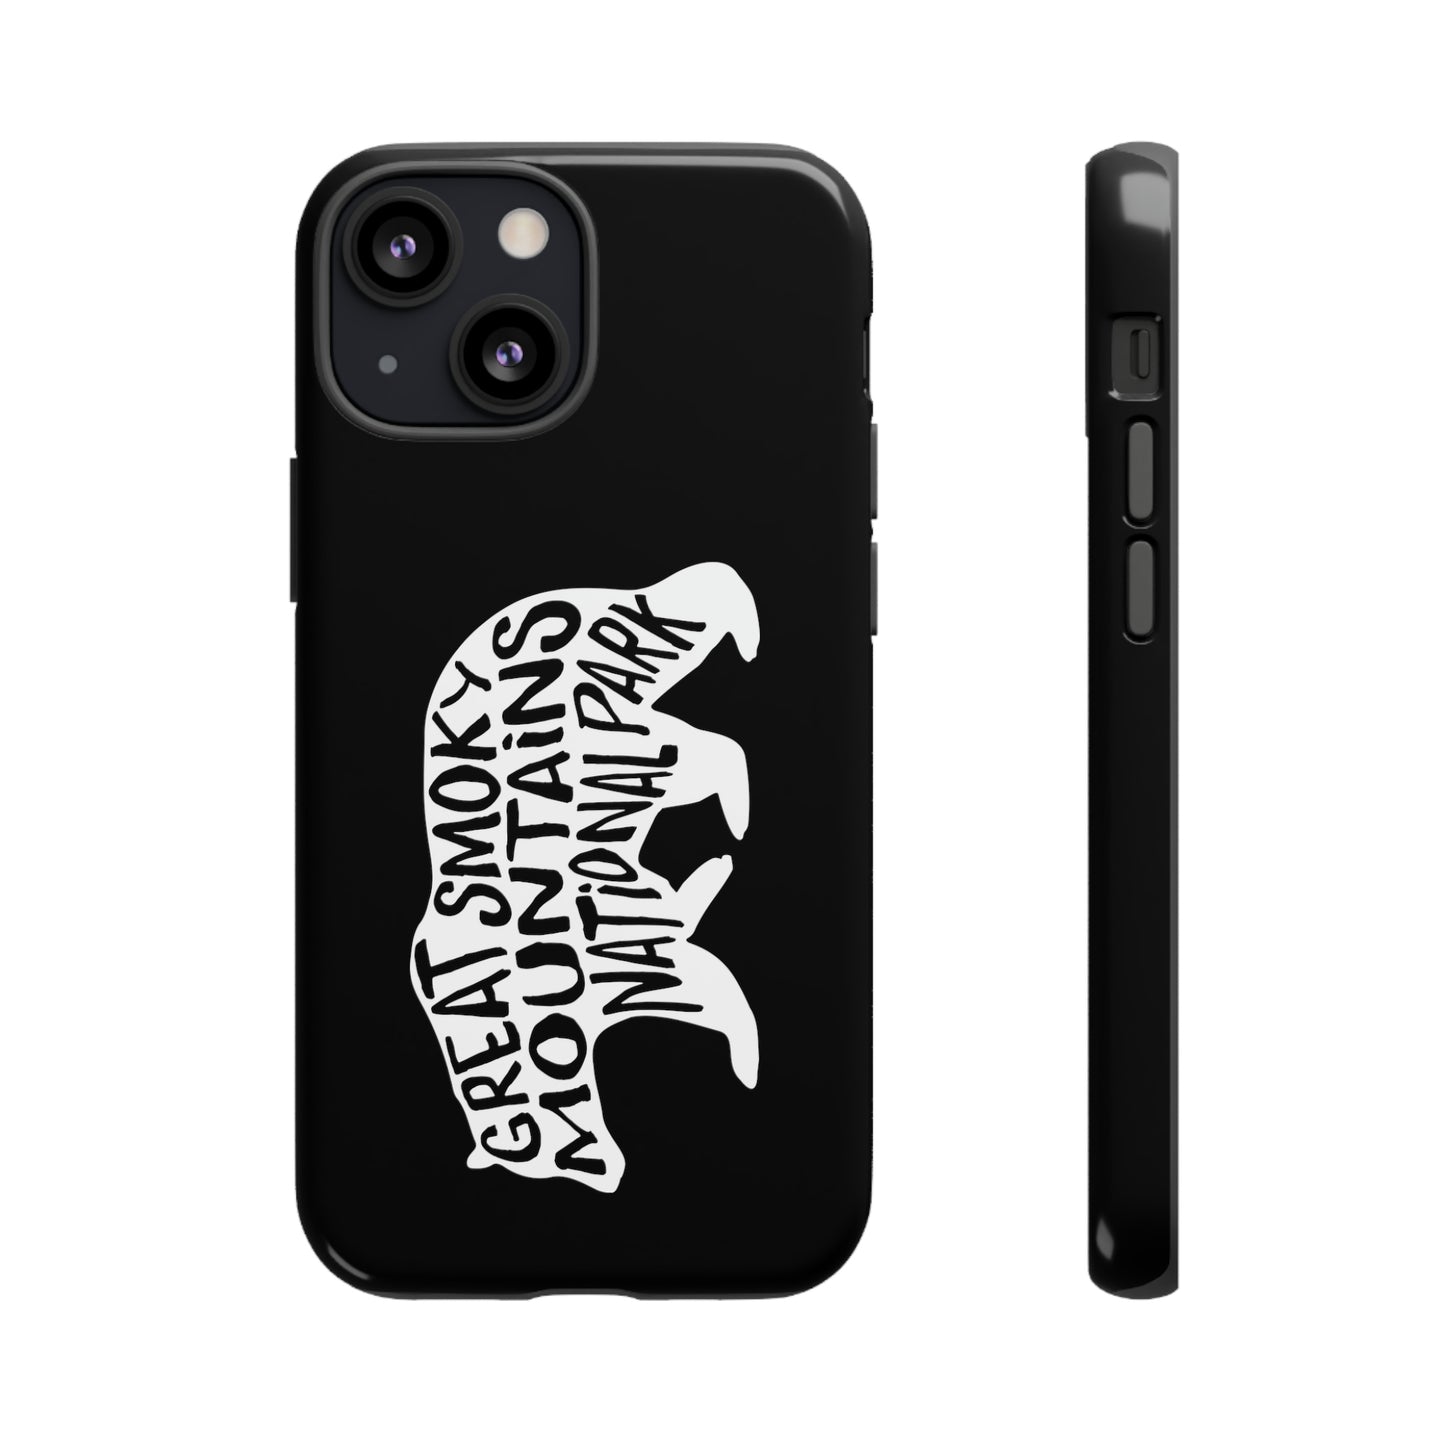 Great Smoky Mountains National Park Phone Case - Black Bear Design